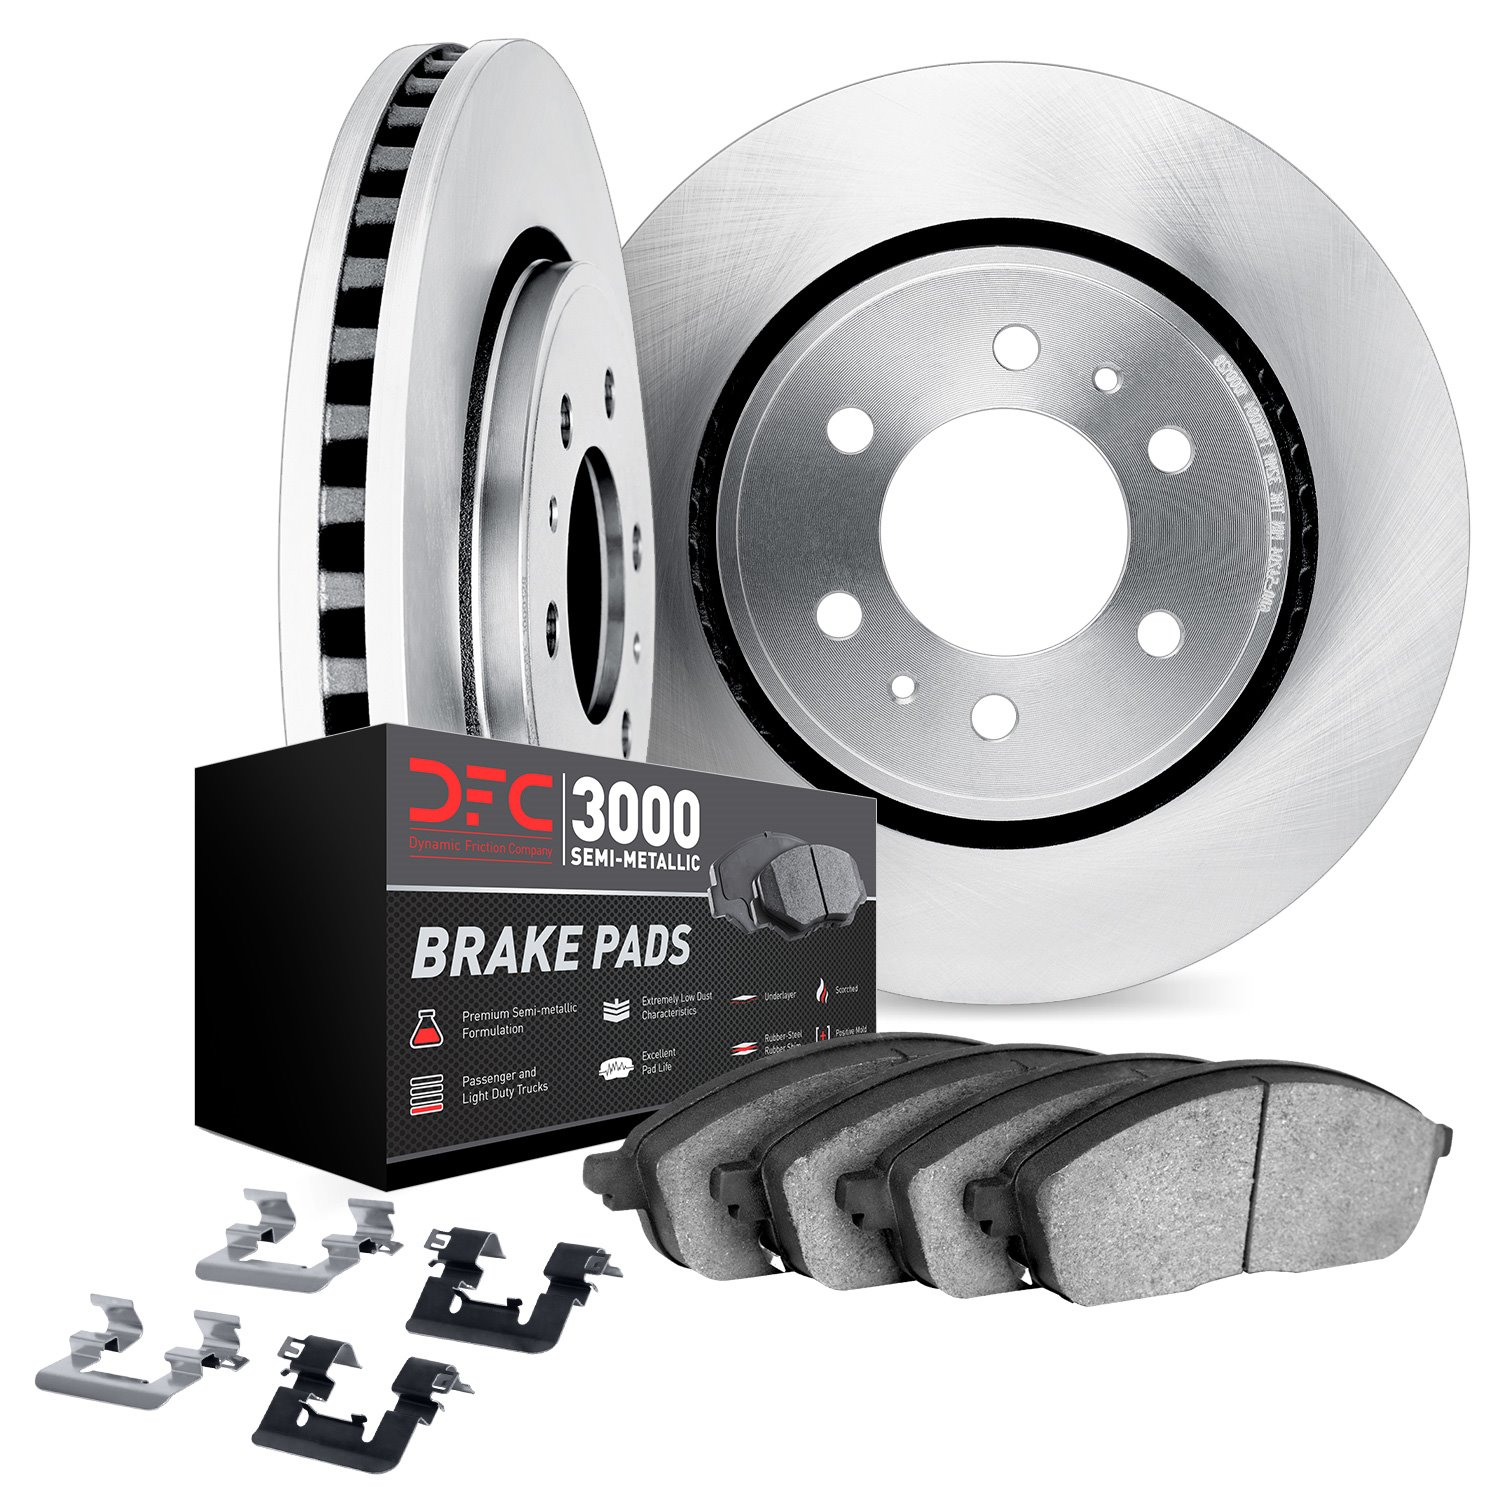 5112-76100 Slotted Brake Rotors with 3000-Series Semi-Metallic Brake Pads Kit & Hardware [Silver], Fits Select Lexus/Toyota/Scio